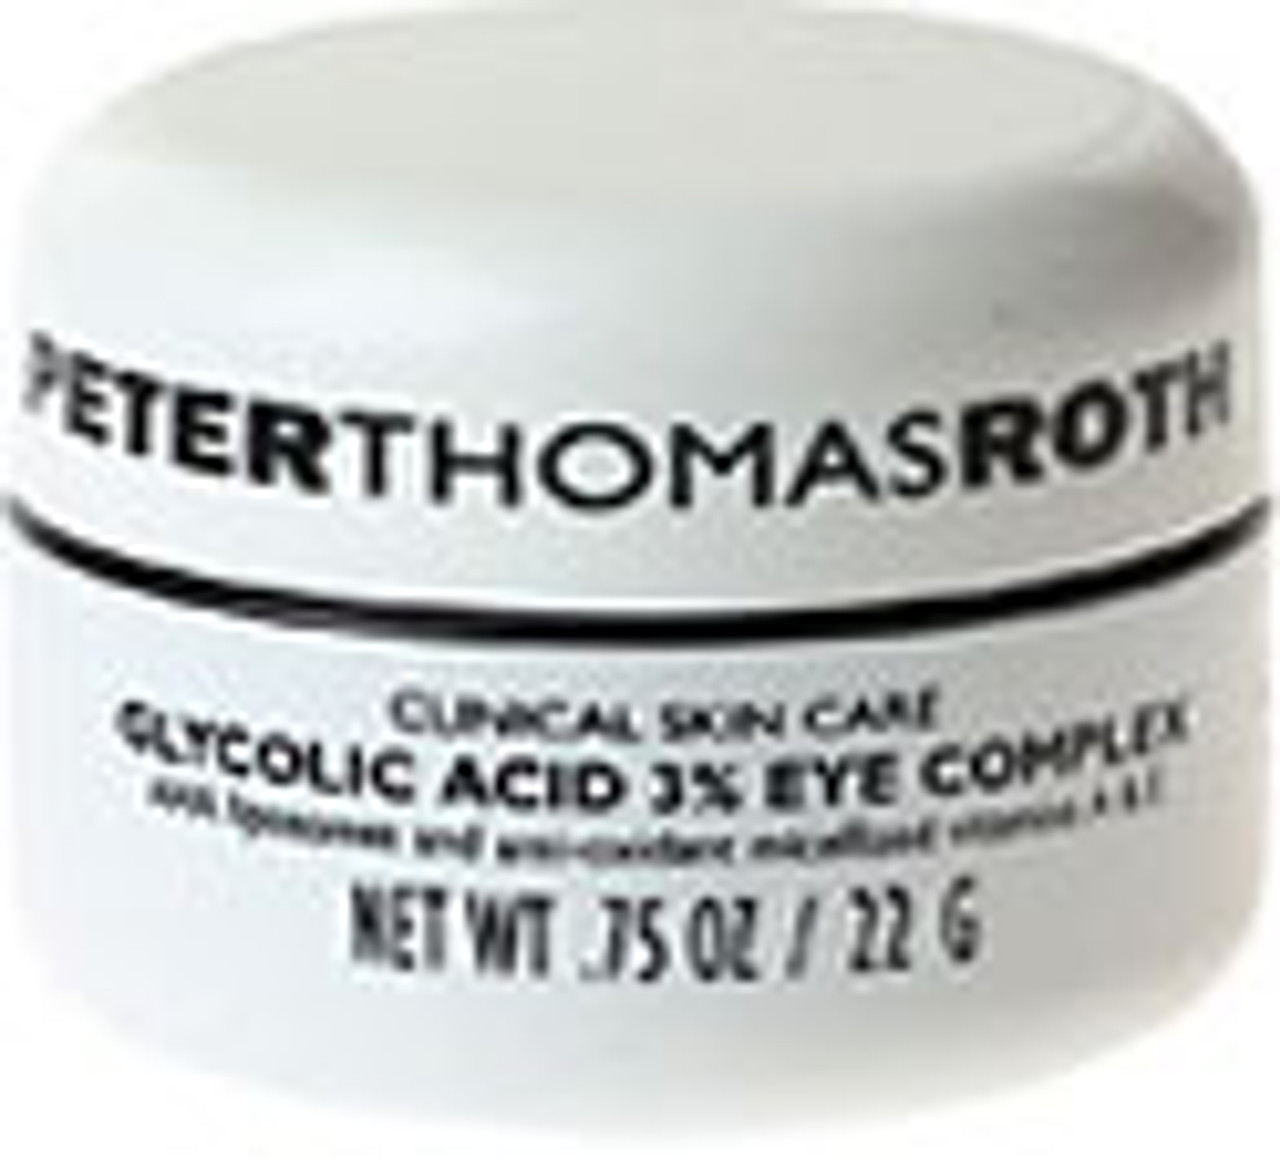 Peter Thomas Roth Glycolic Acid 3% Eye Complex, .75 oz